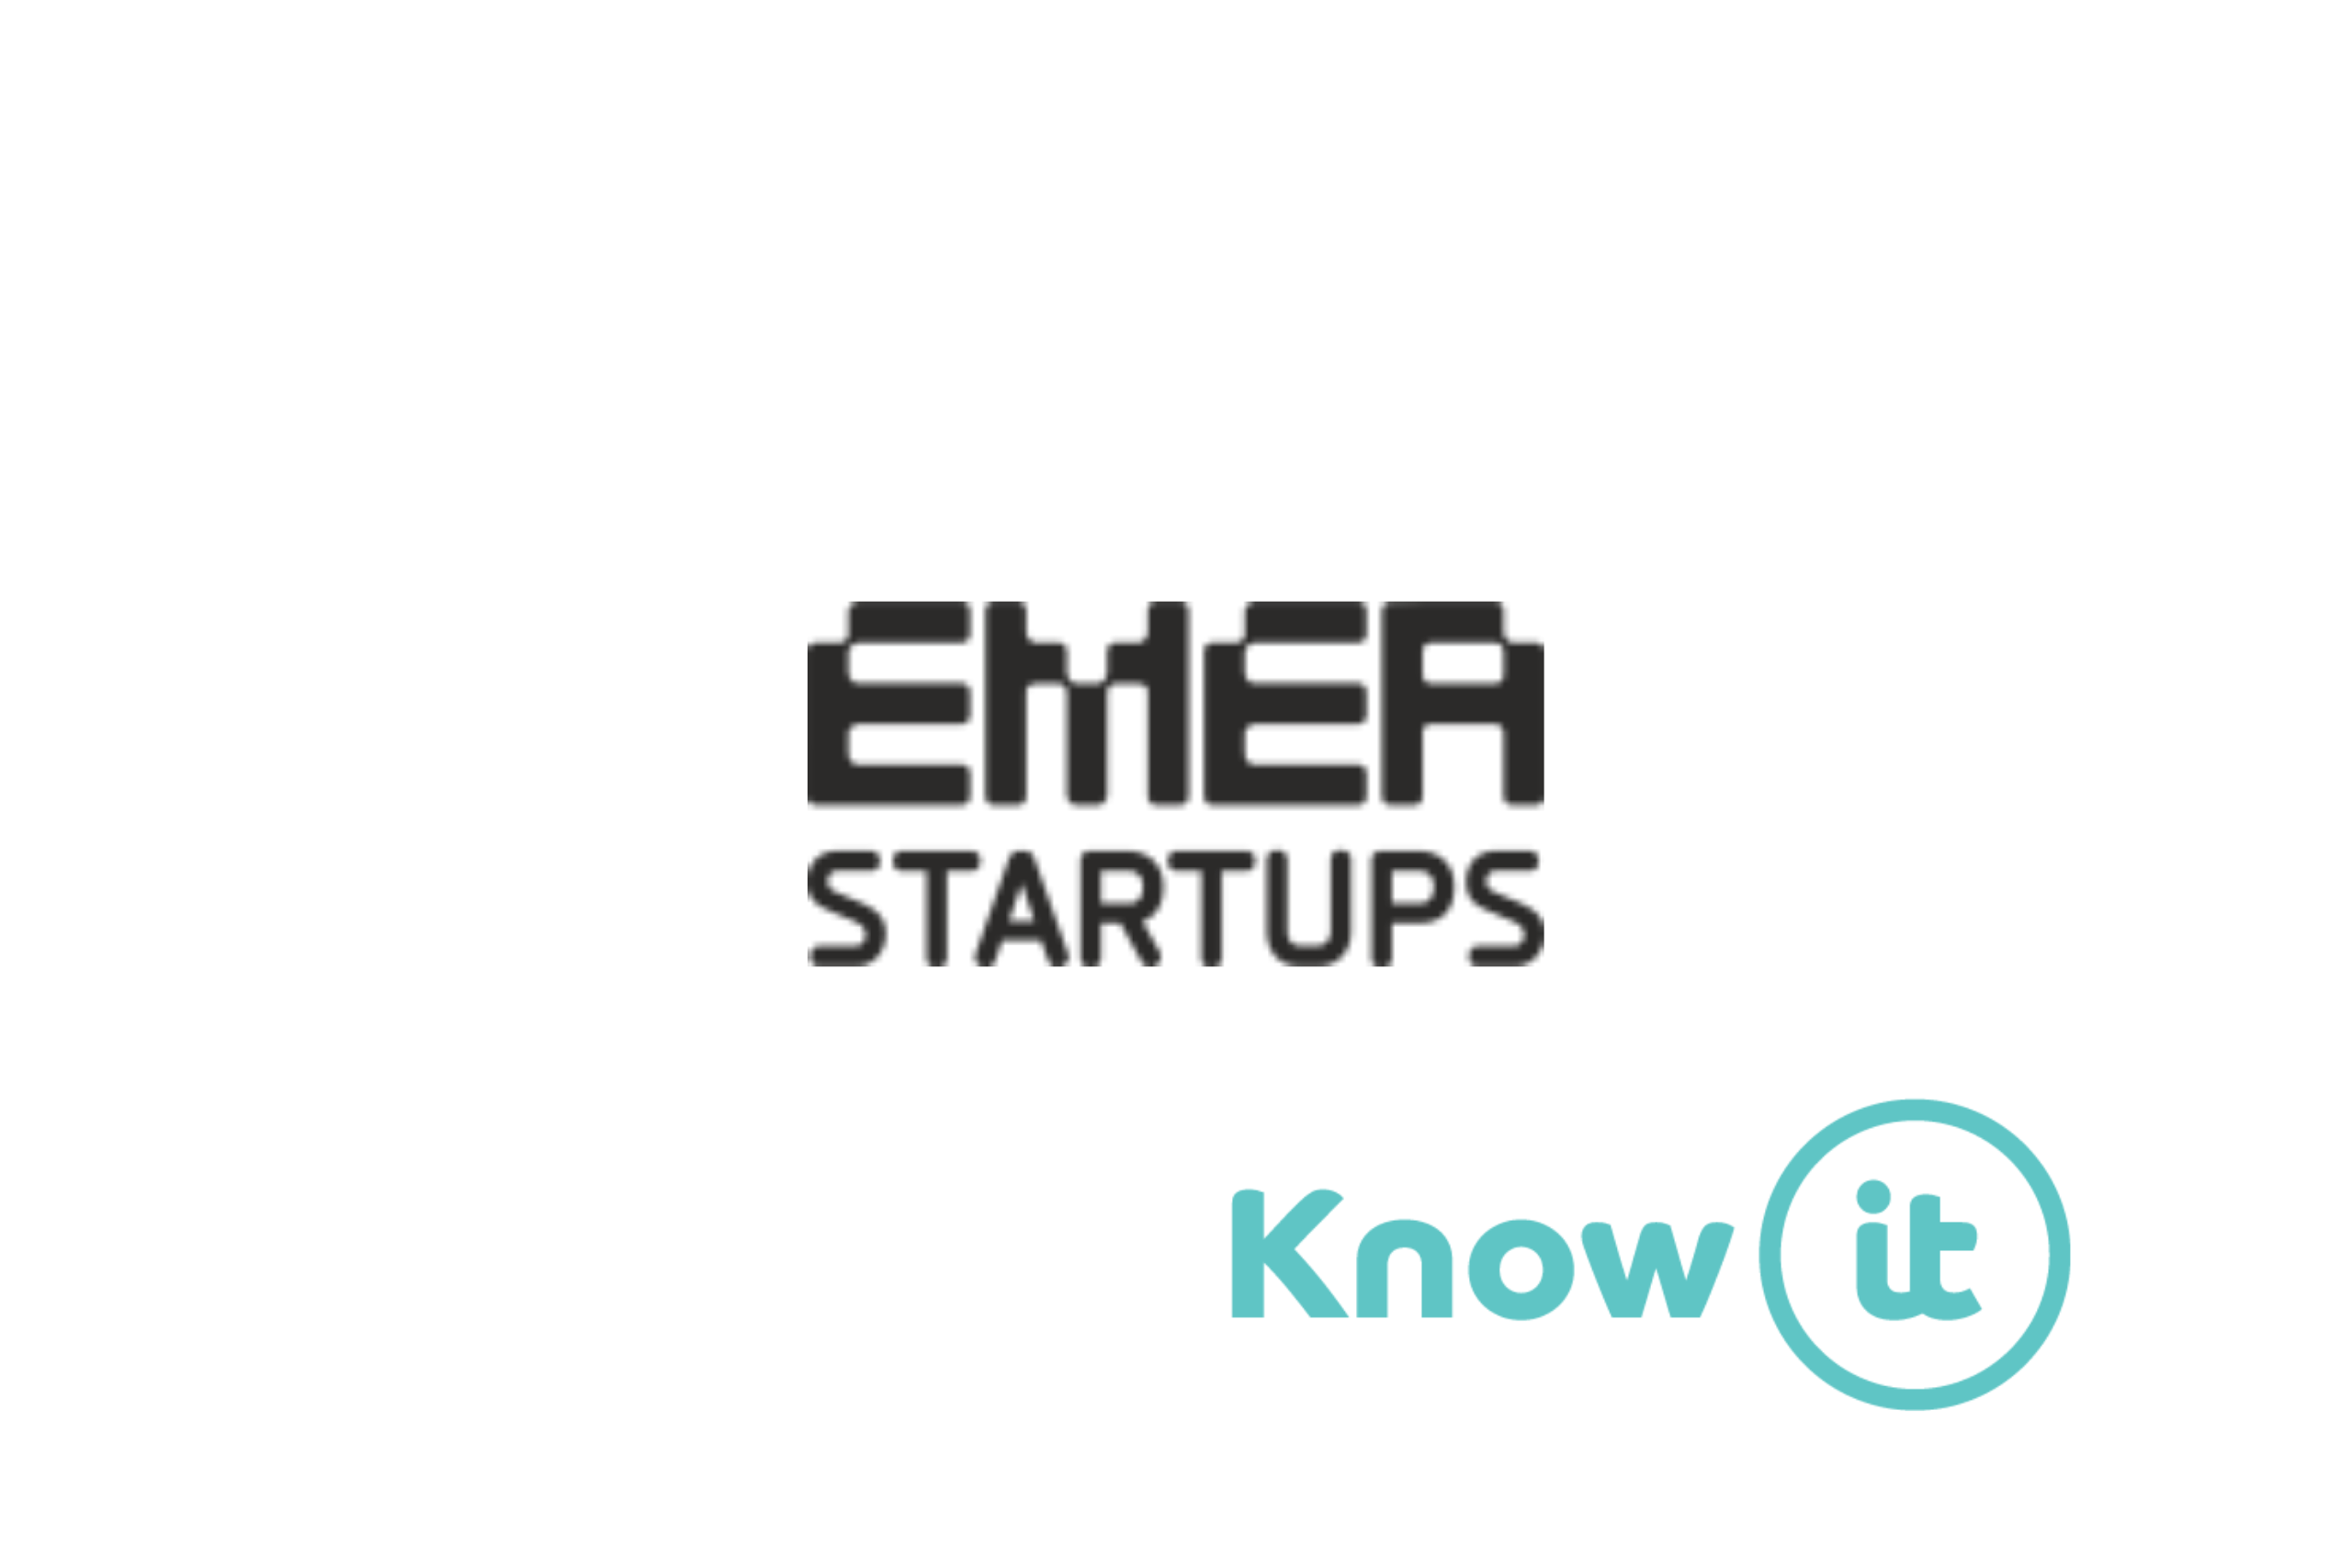 know-it x emea startups